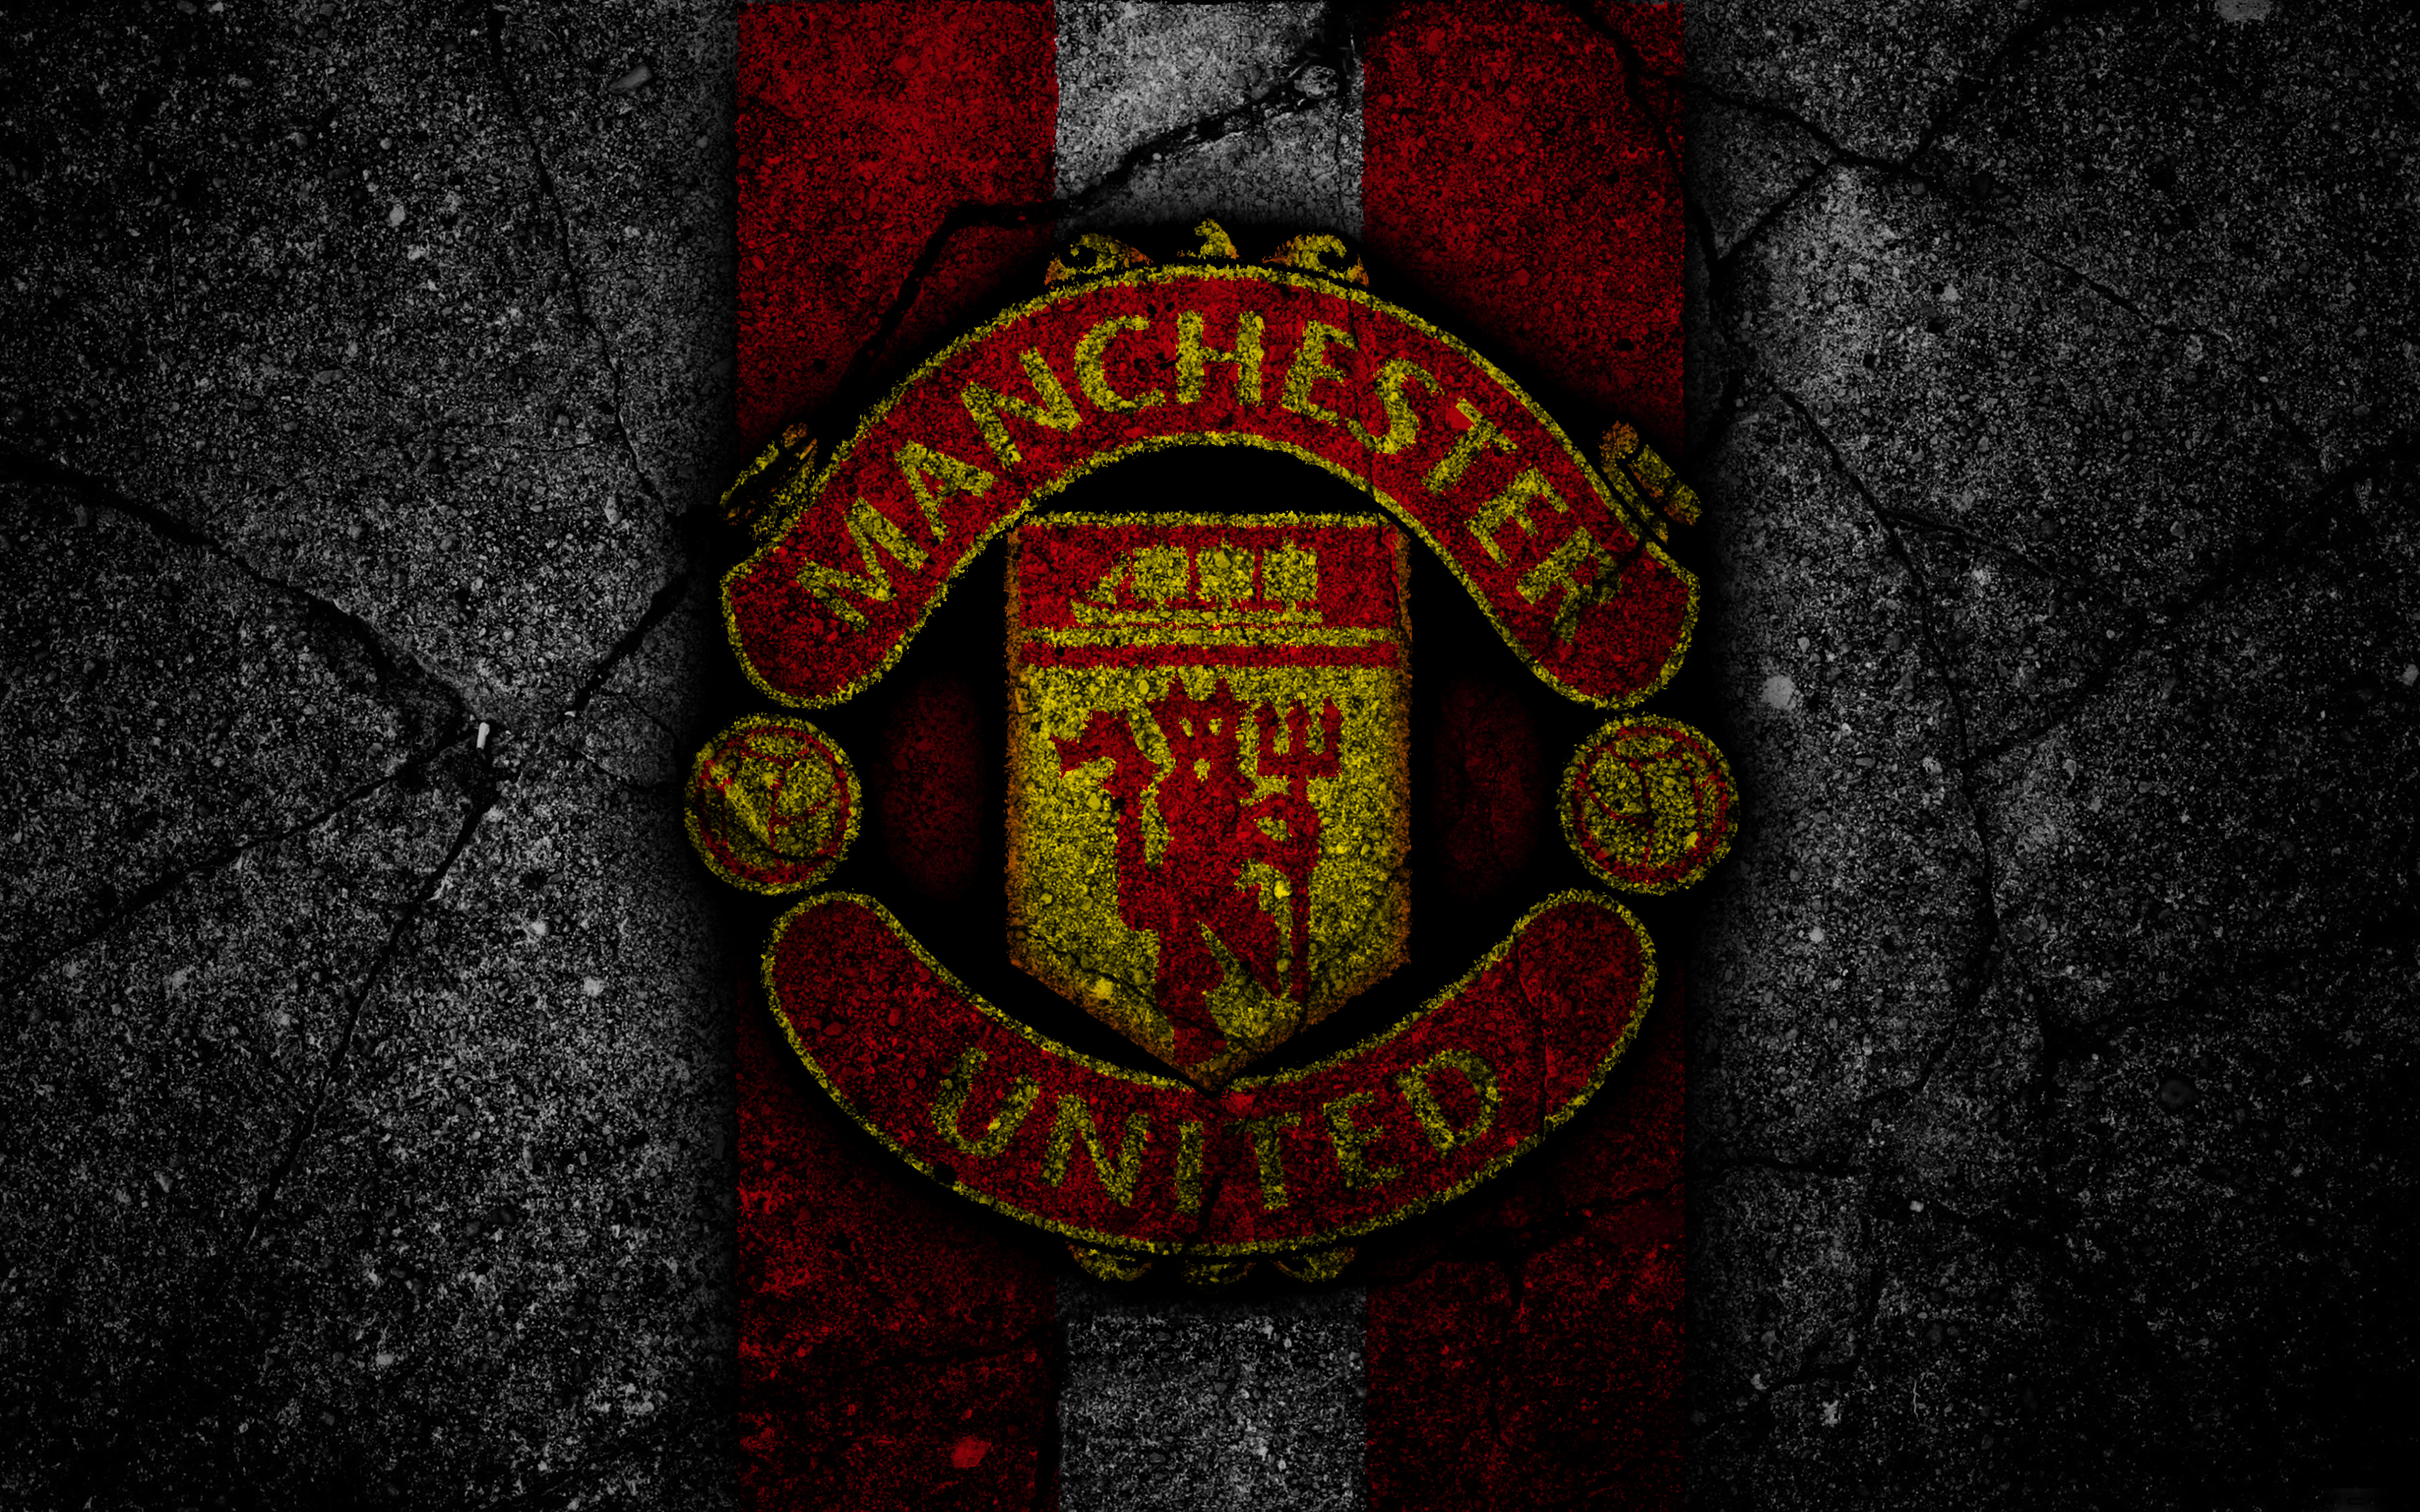 Manchester United Logo 4k Ultra HD Wallpaper | Background Image | 3840x2400